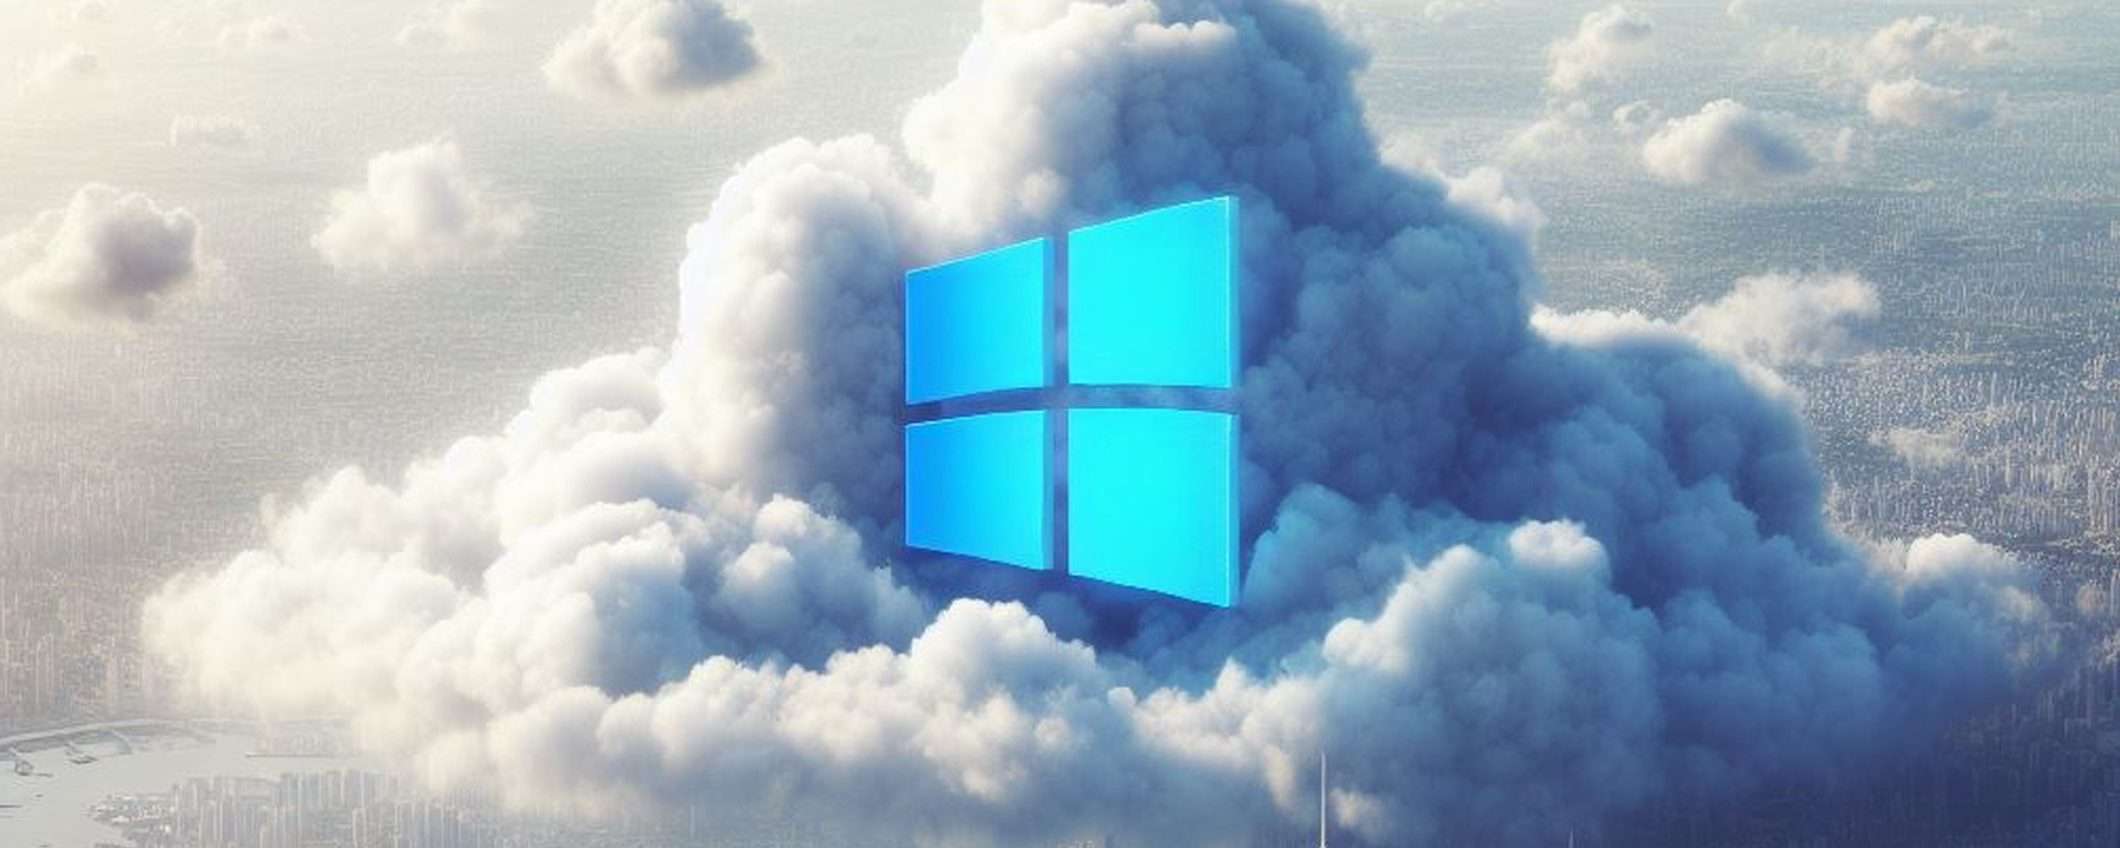 Microsoft: trimestrale positiva grazie al cloud